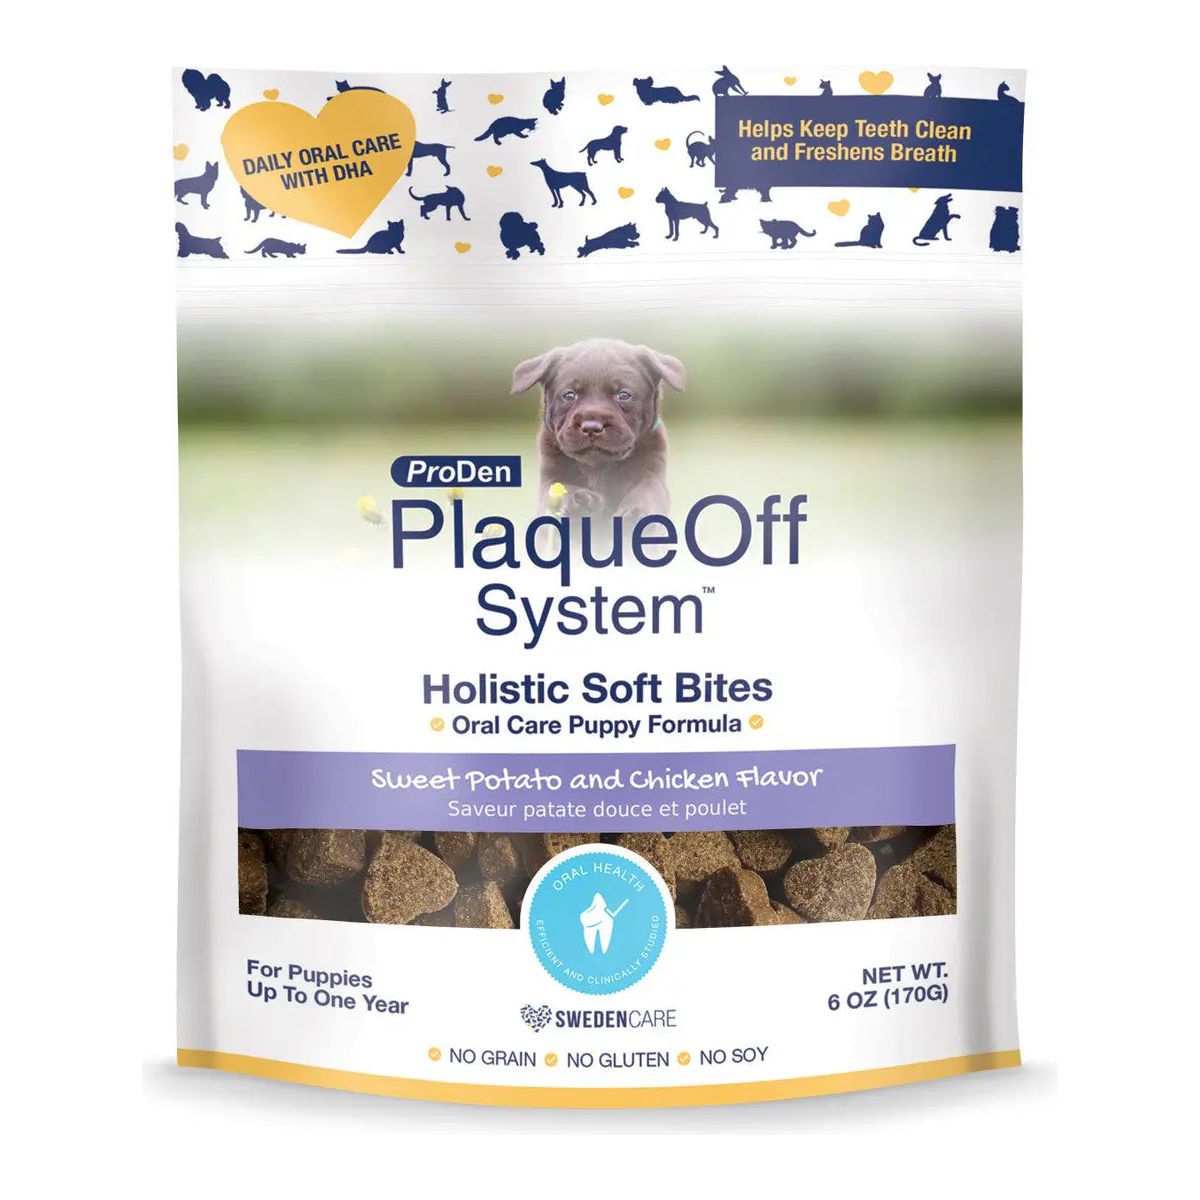 PlaqueOff Holistic Soft Bites Oral Care Puppy Formula pla